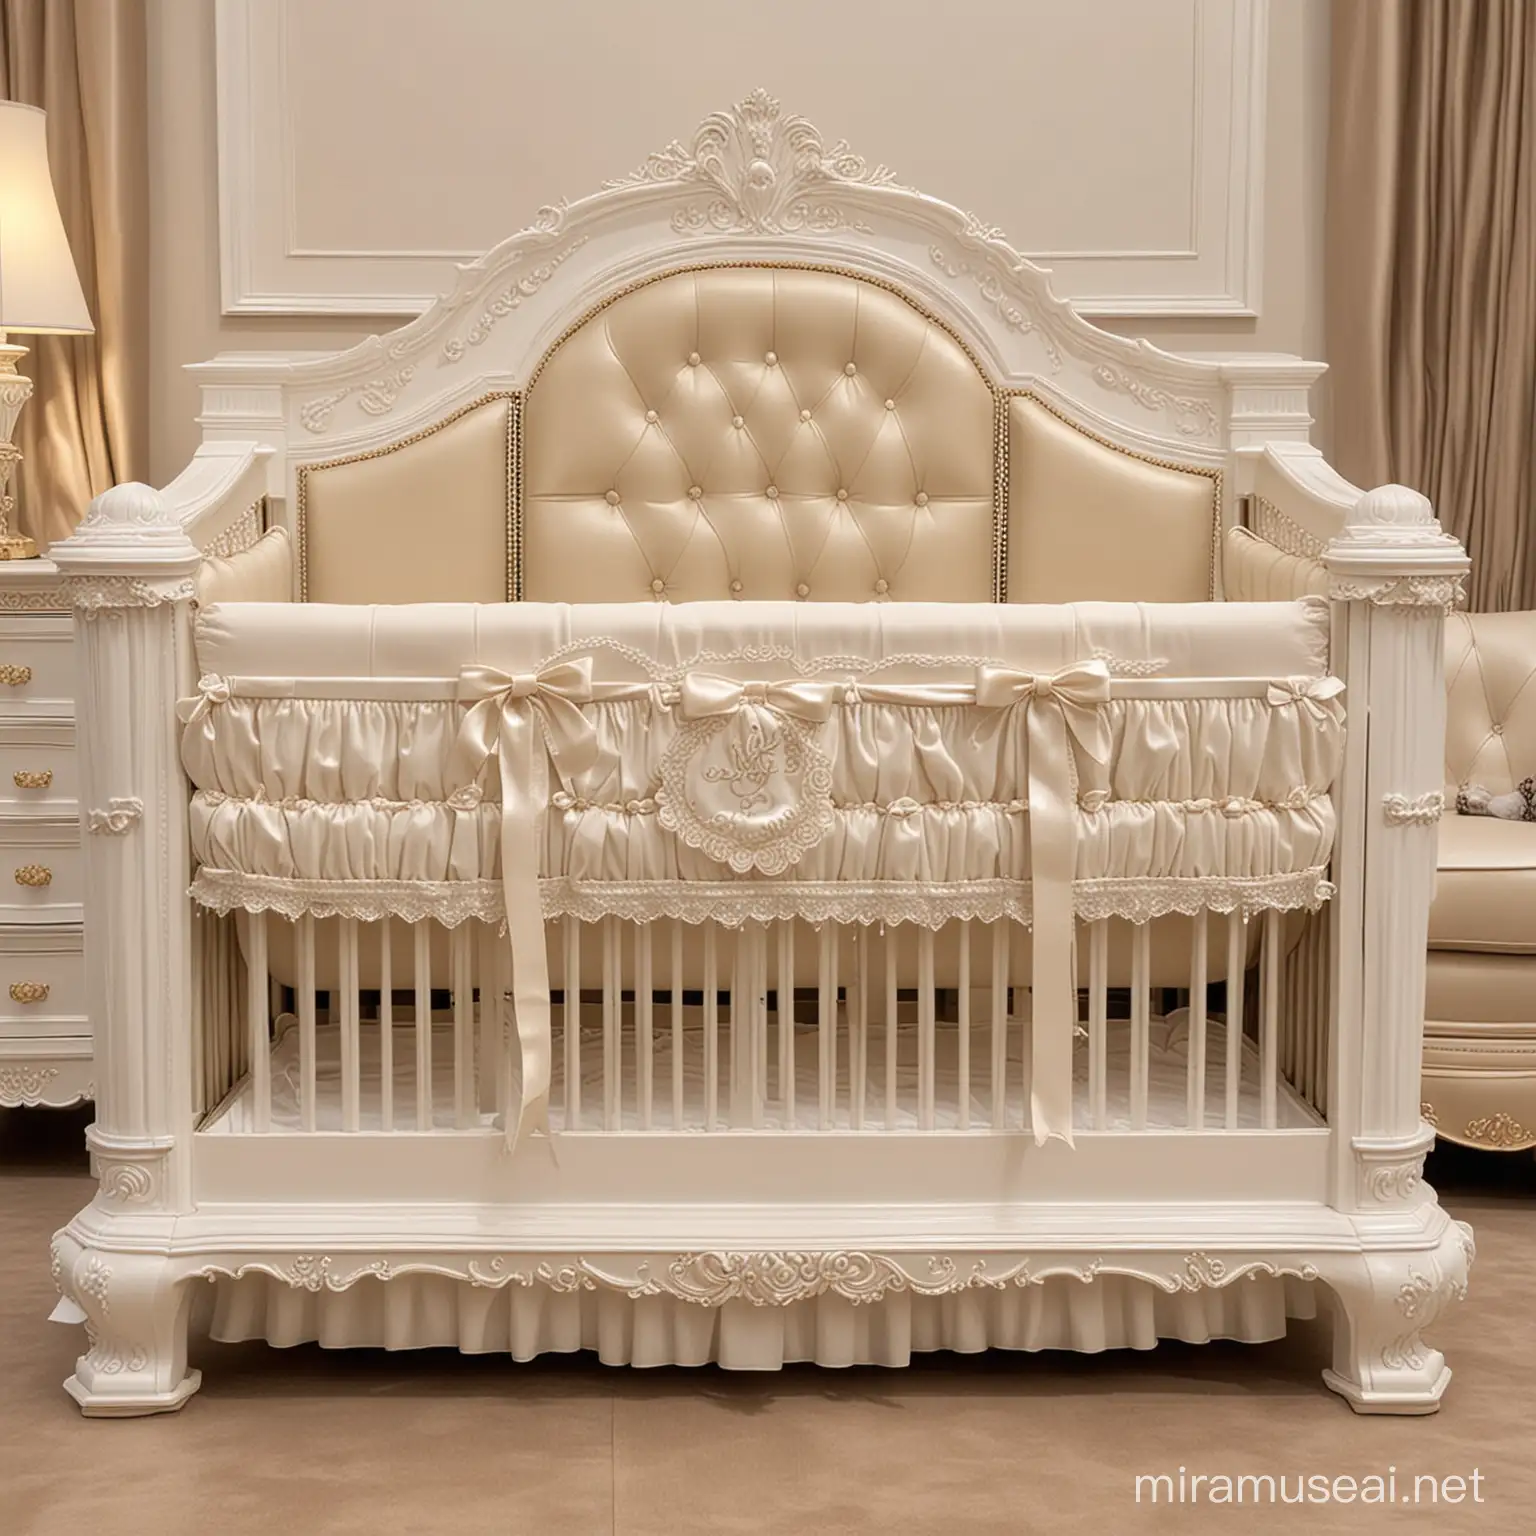 Luxurious Billionaire Baby Crib Opulent Comfort for Elite Infants